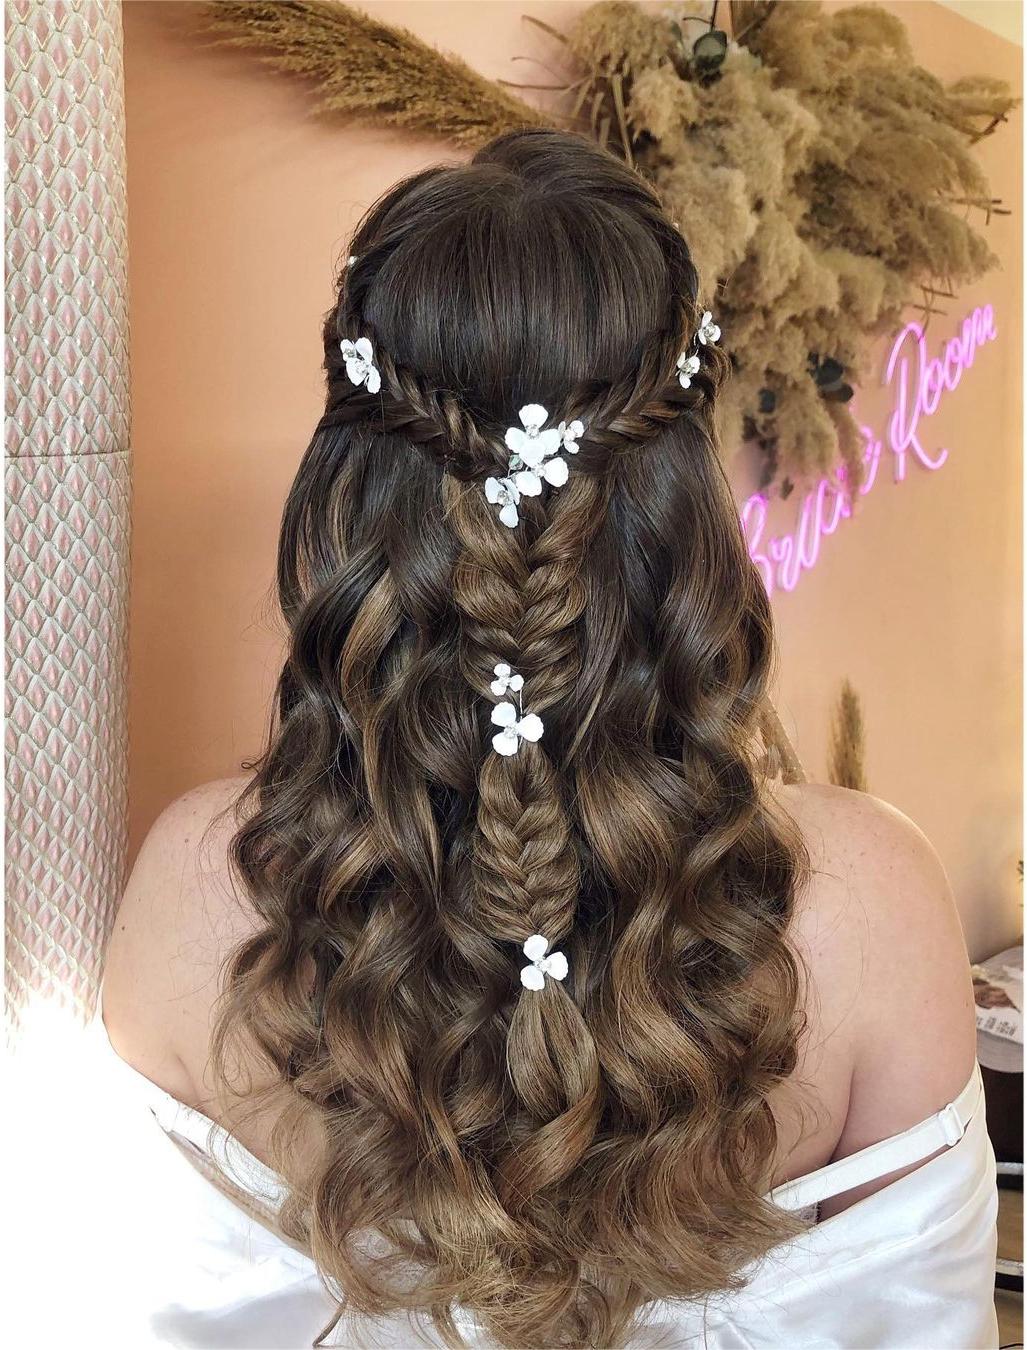 boho fishtail braided half up half down prom hairstyle with flowers via zhanna_syniavska